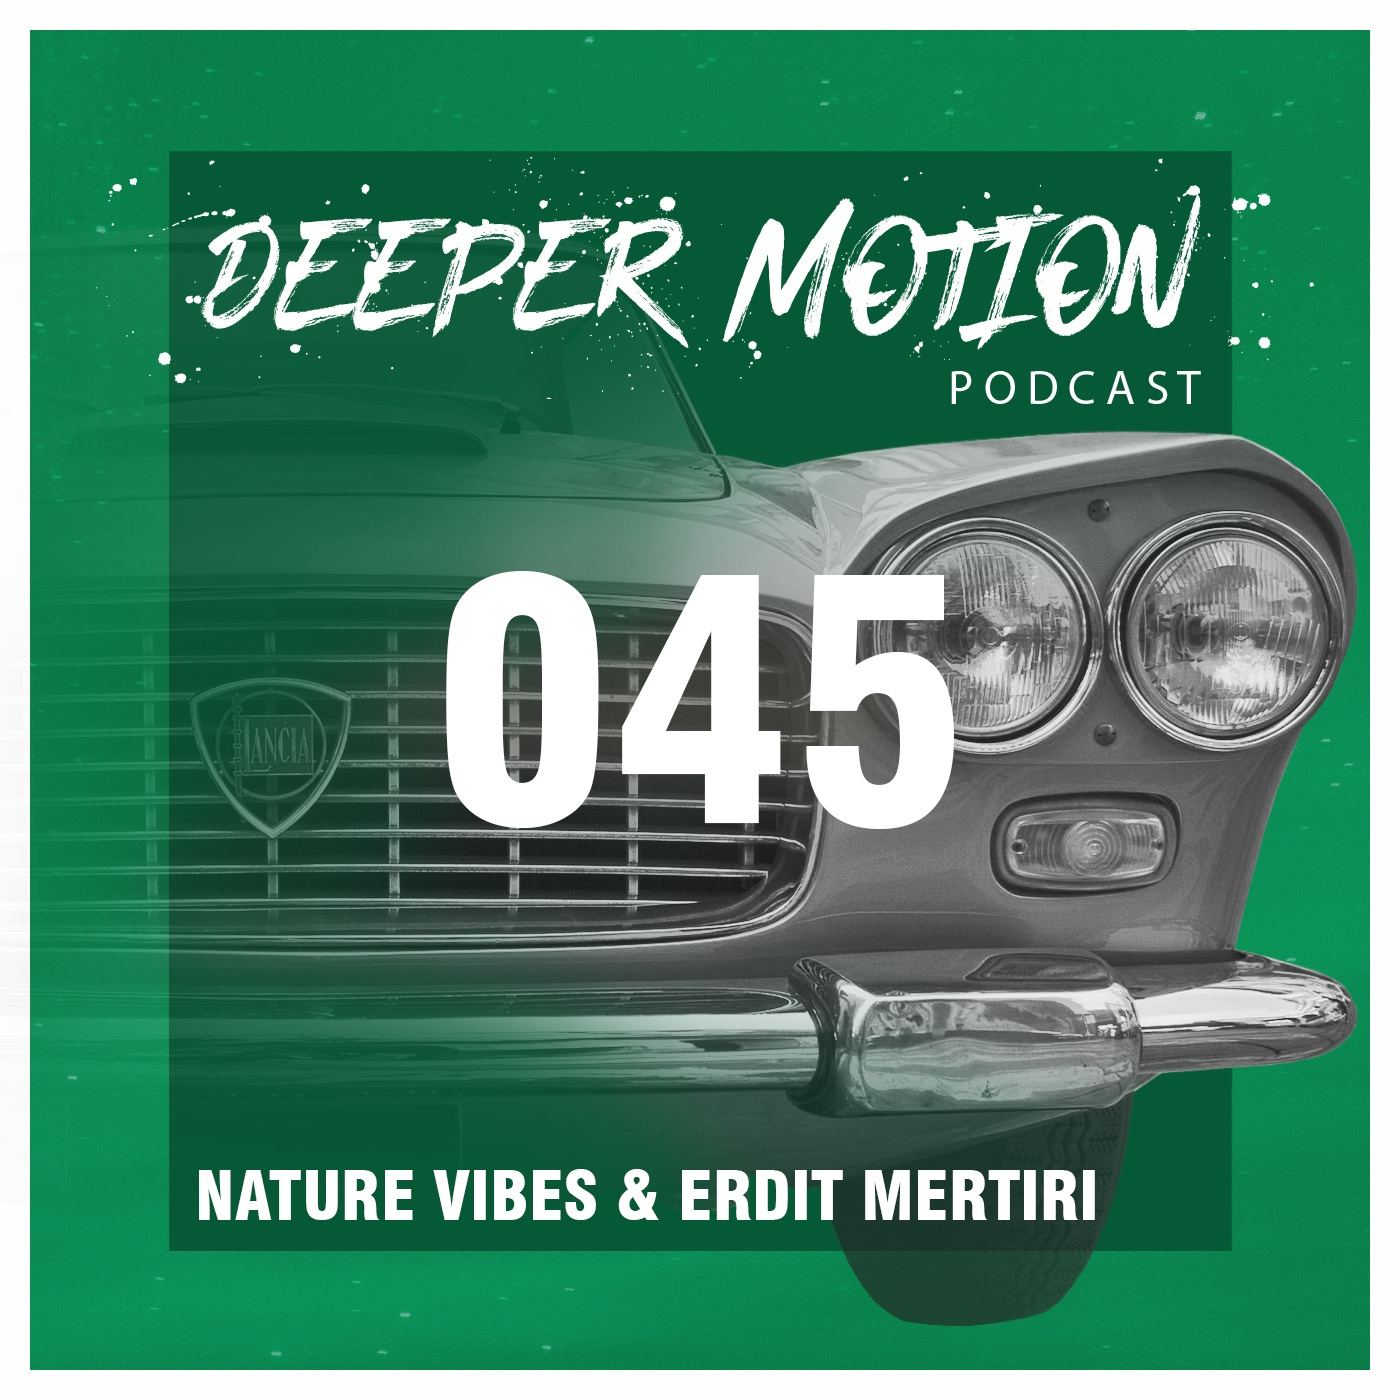 Deeper Motion Podcast. Erdit Mertiri. Deeper Motion recordings. Nature Vibes mp3. Deep motion